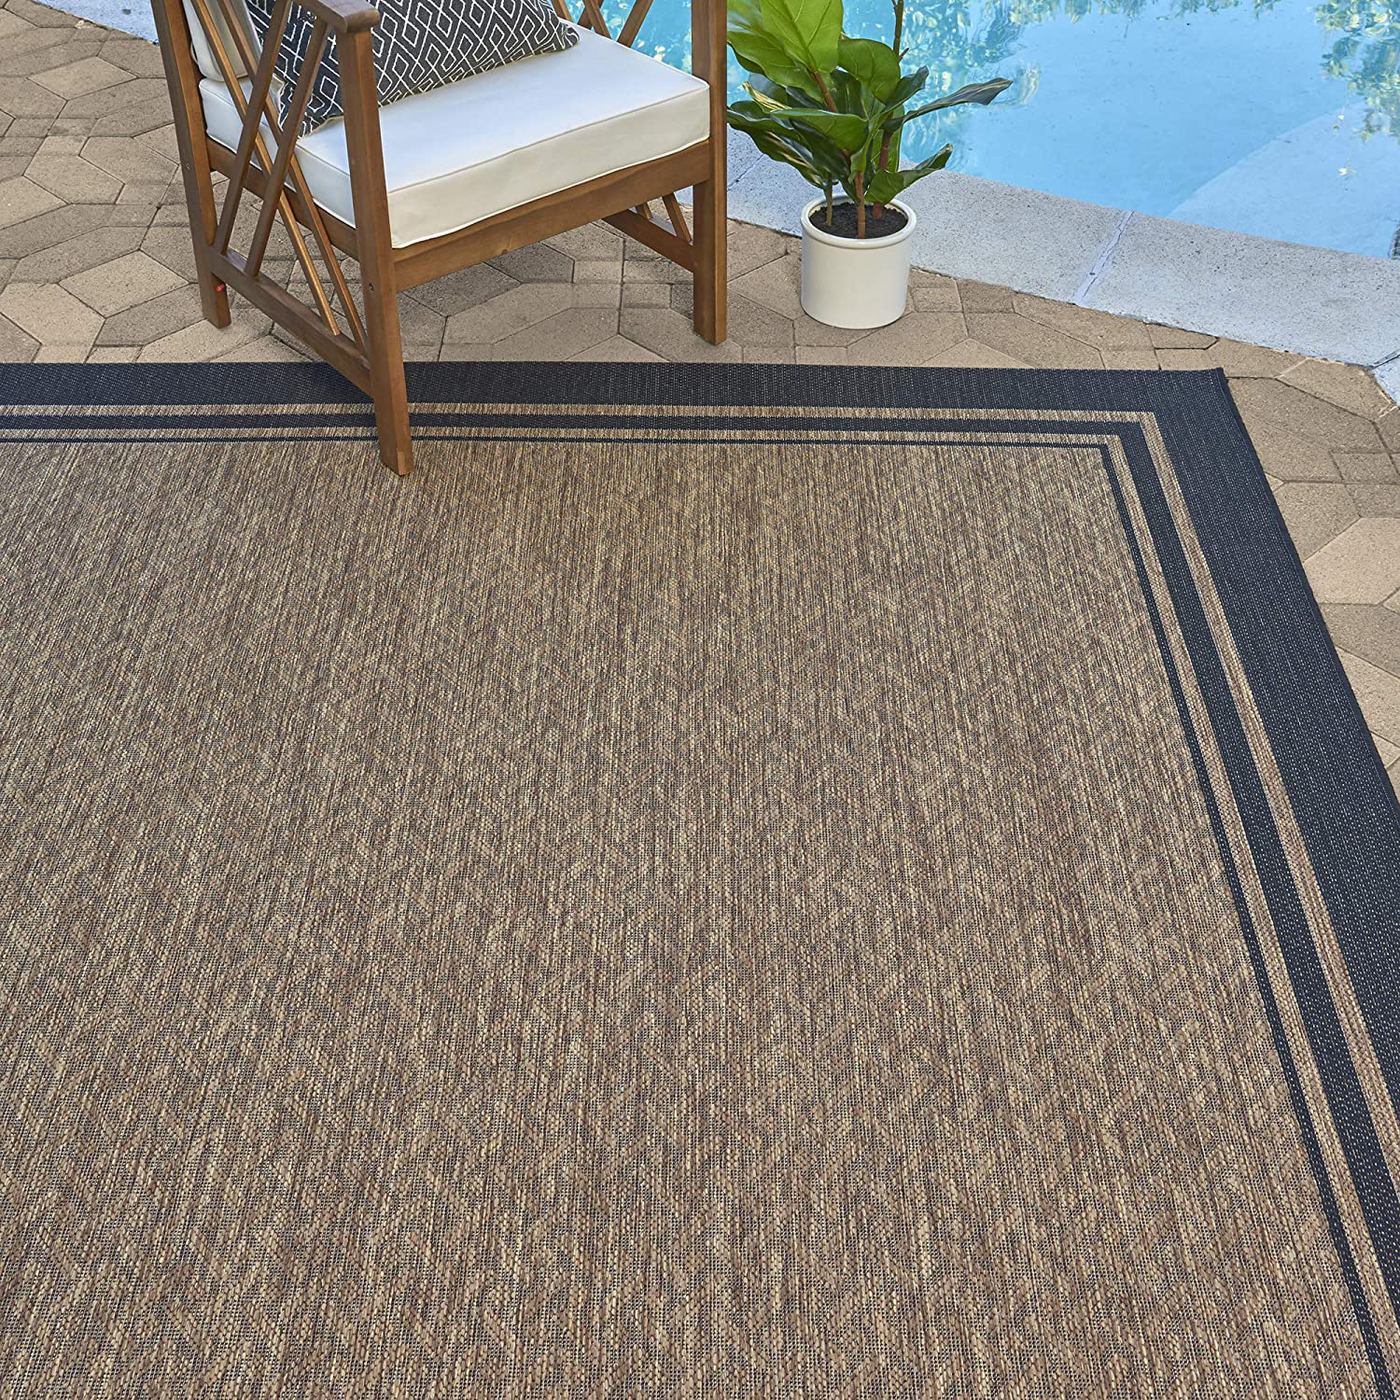 Gertmenian Tropical Collection Outdoor Rug Patio Area Carpet, 2x6 Runner, Nut Brown Black Border